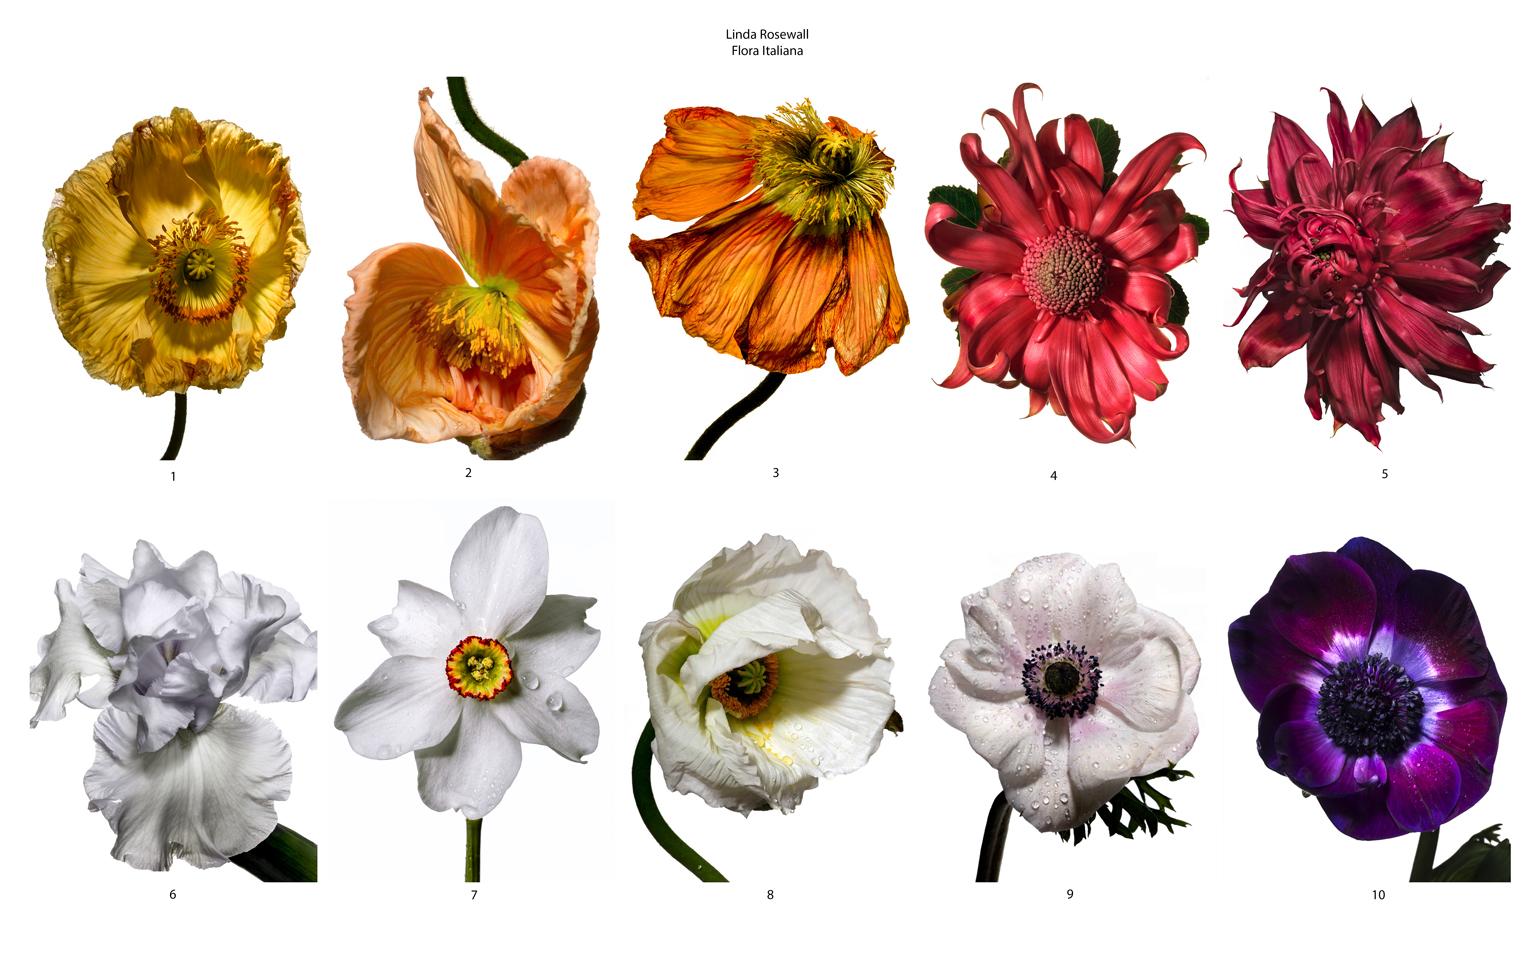 Flora Italiana ( Narzissen Poetic) Großformatige botanische Stilllebenfotografie (Grau), Color Photograph, von Linda Rosewall